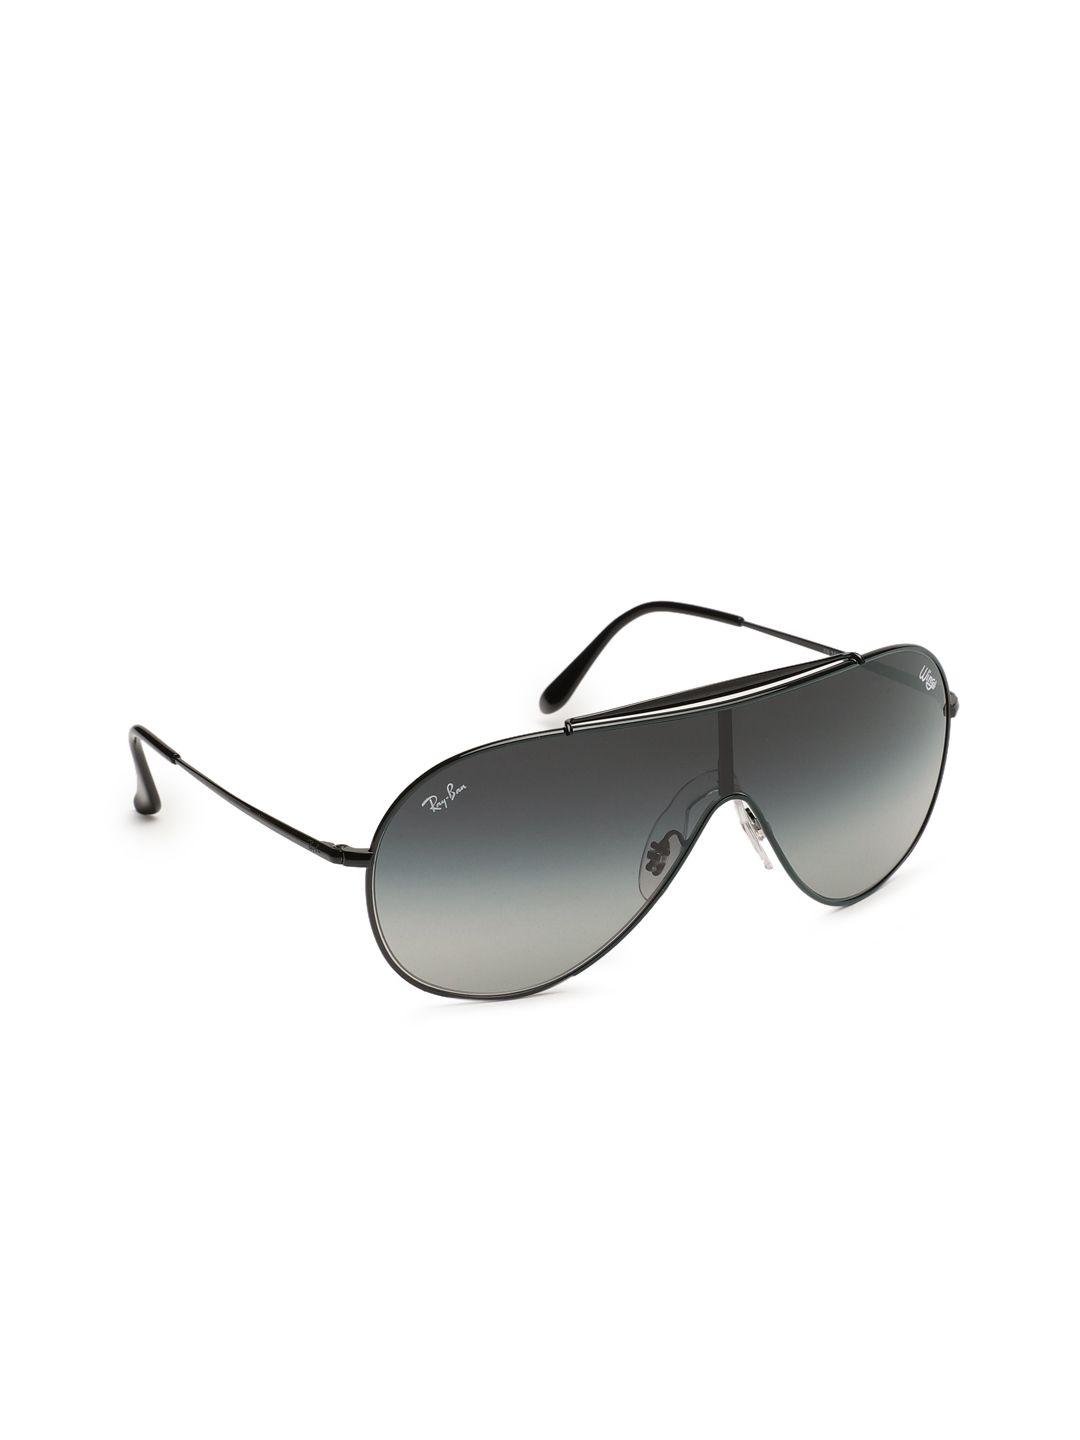 ray-ban-unisex-shield-sunglasses-0rb3597002/1133